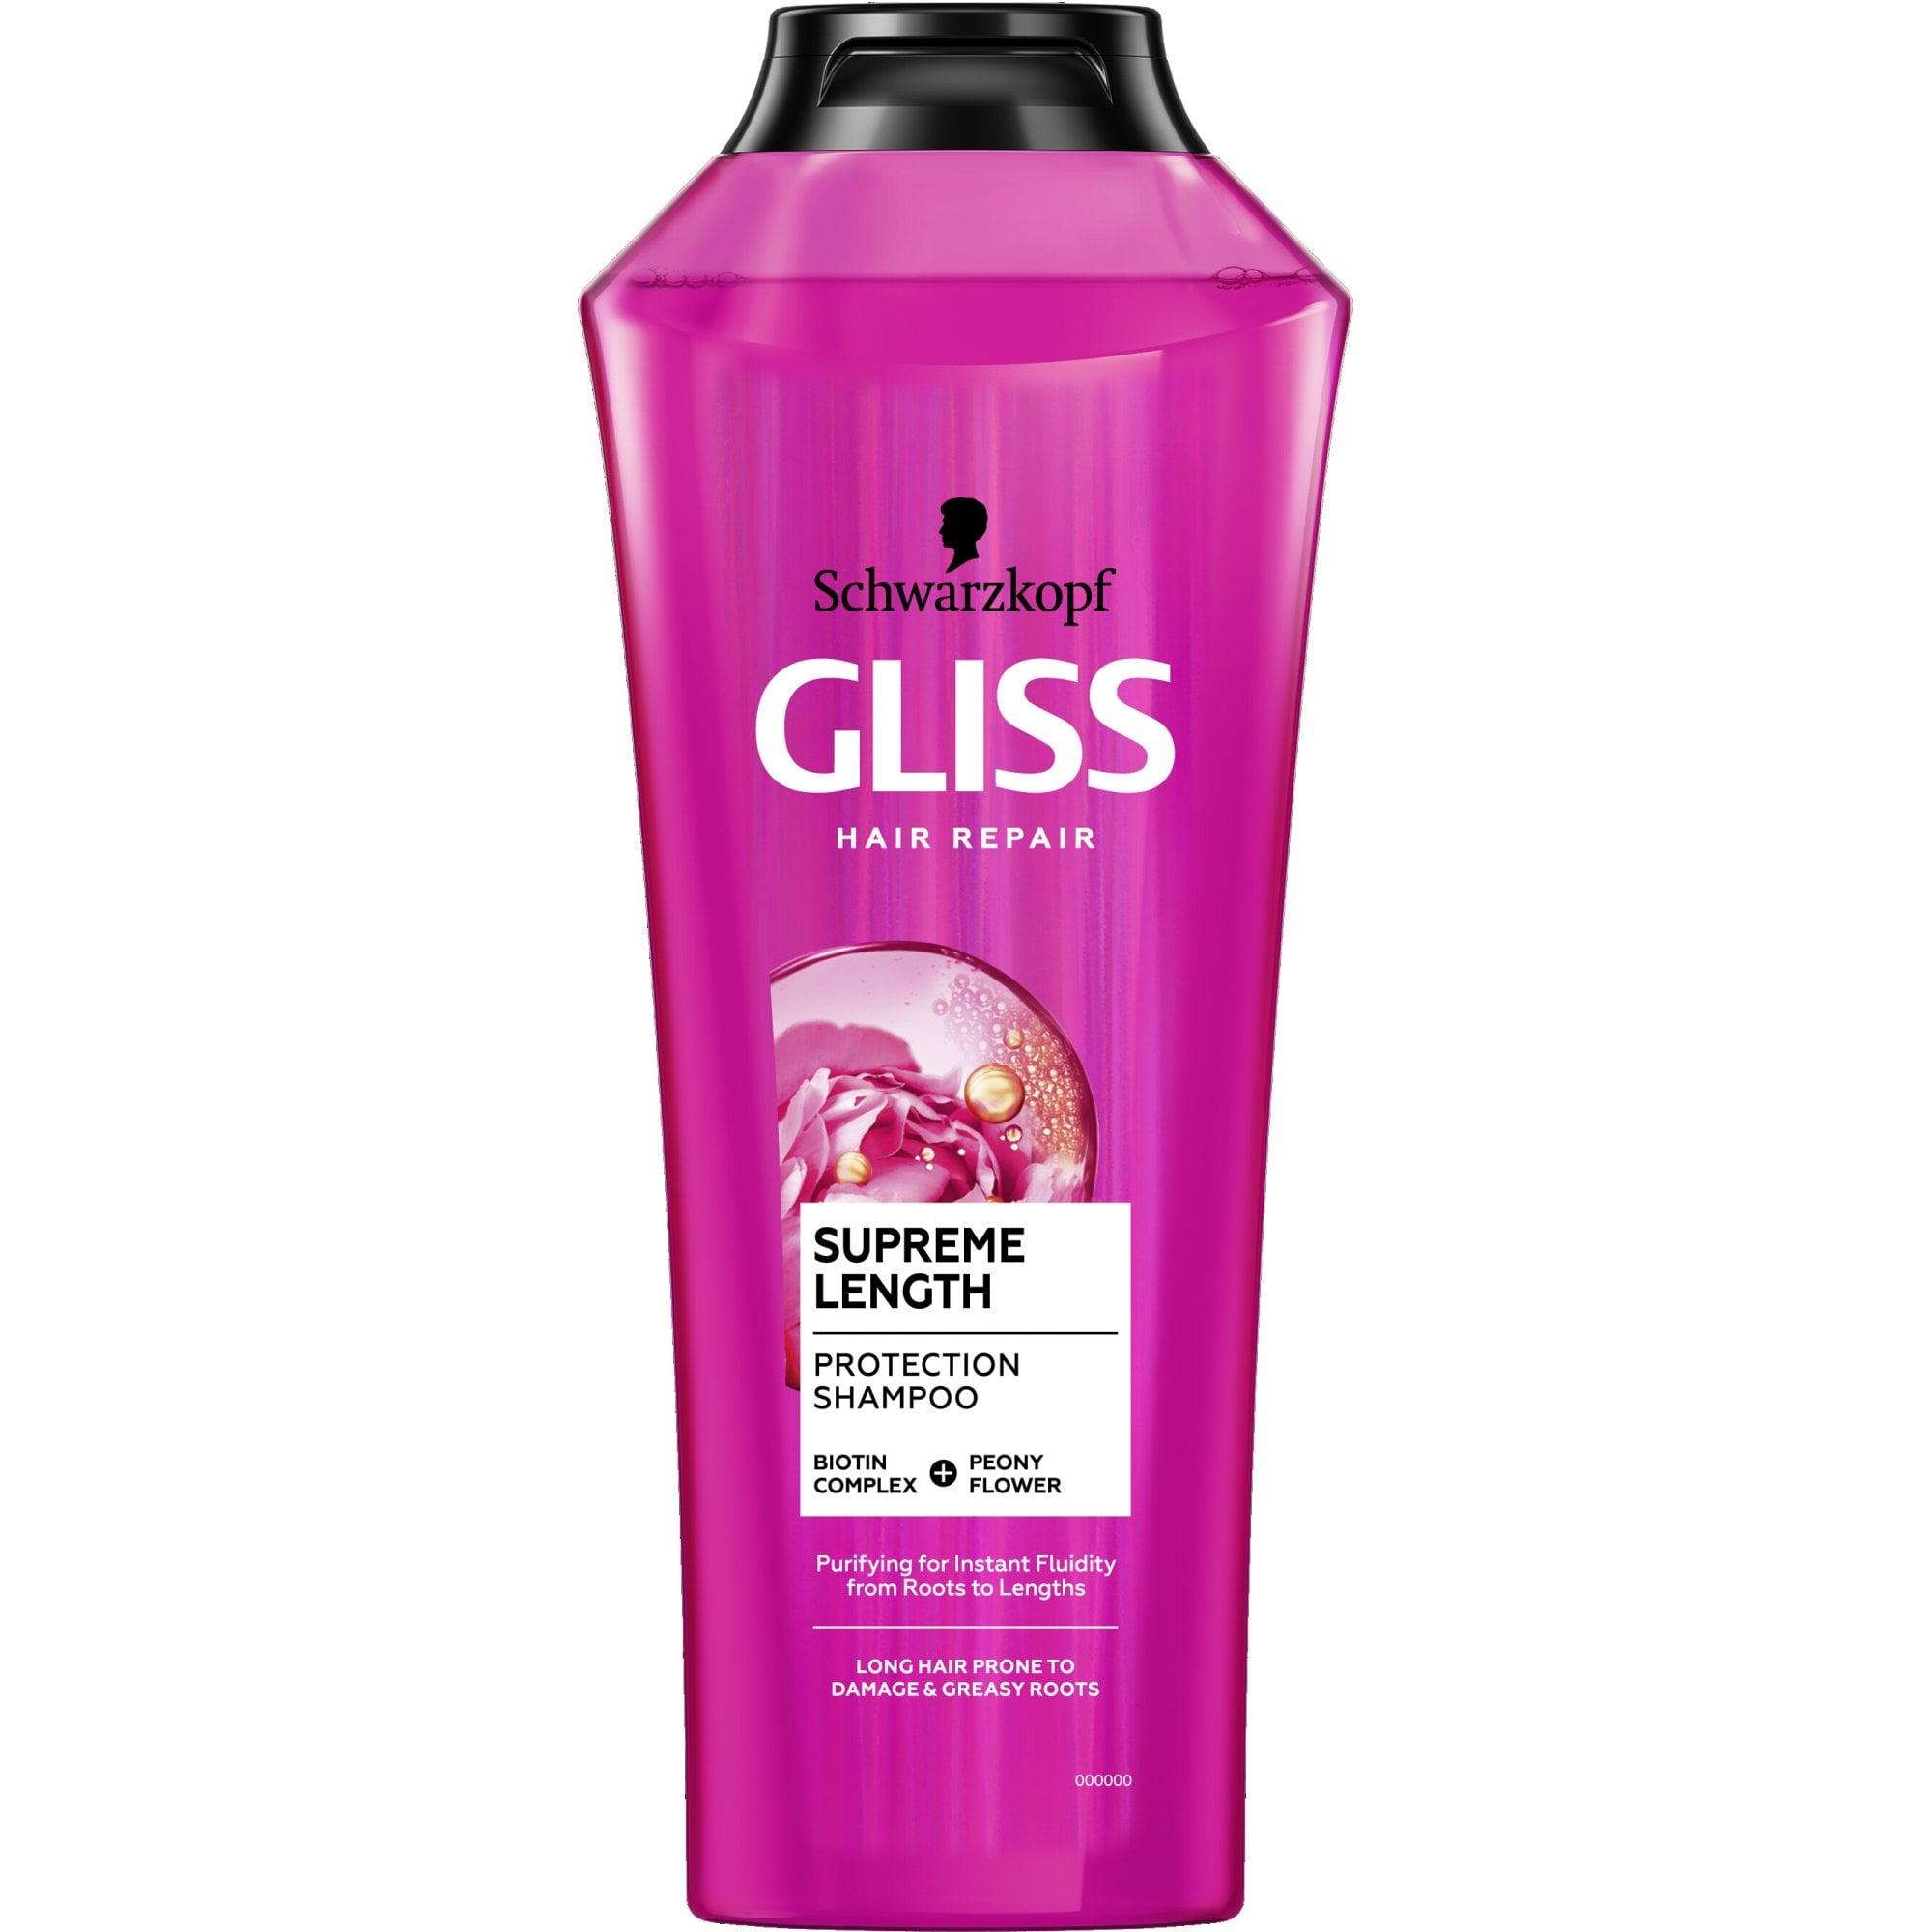 Gliss Supreme Length Protection Shampoo